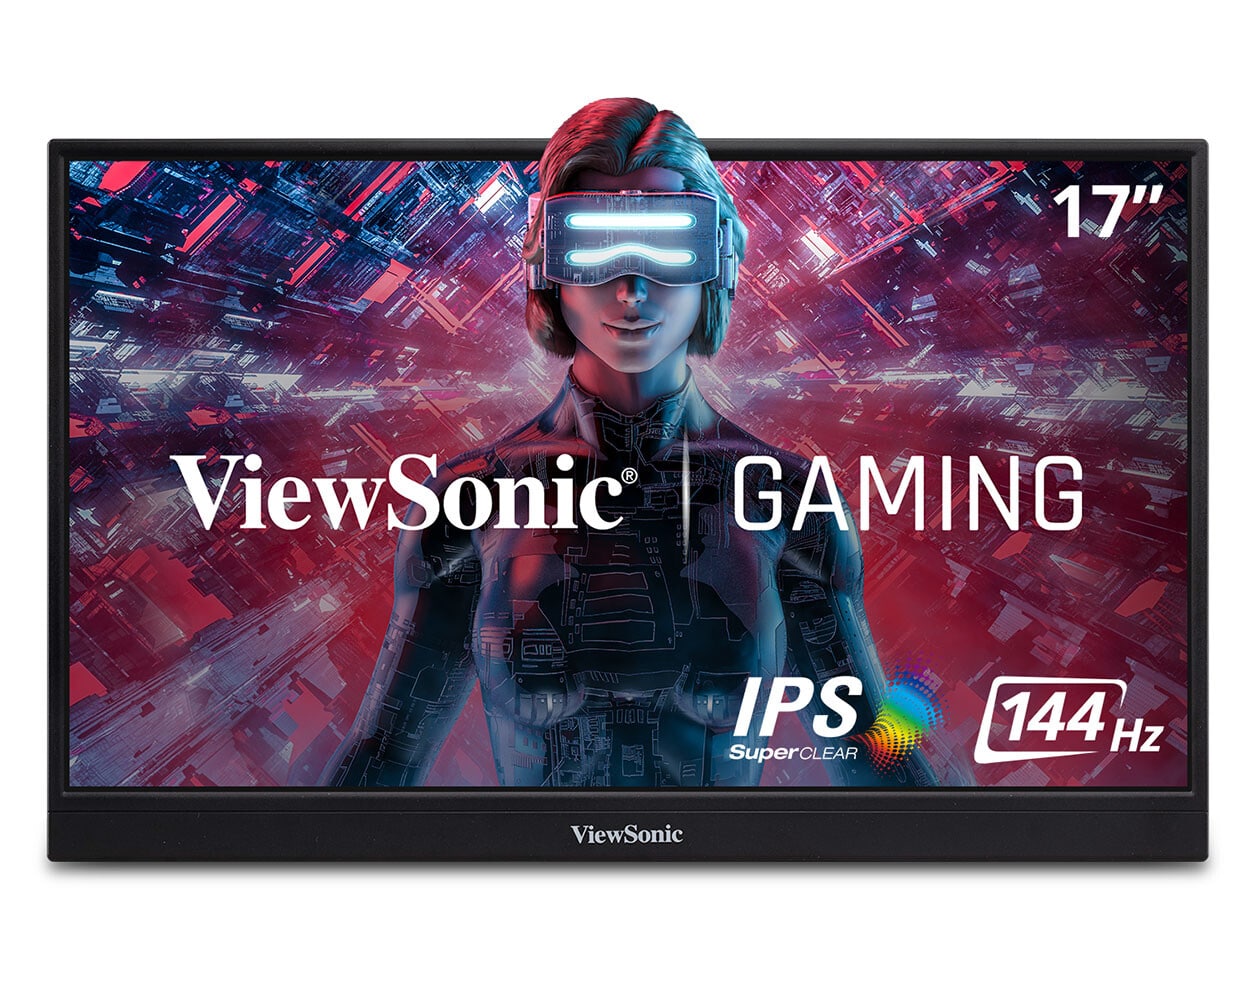 ViewSonic VX1755, GamersRD